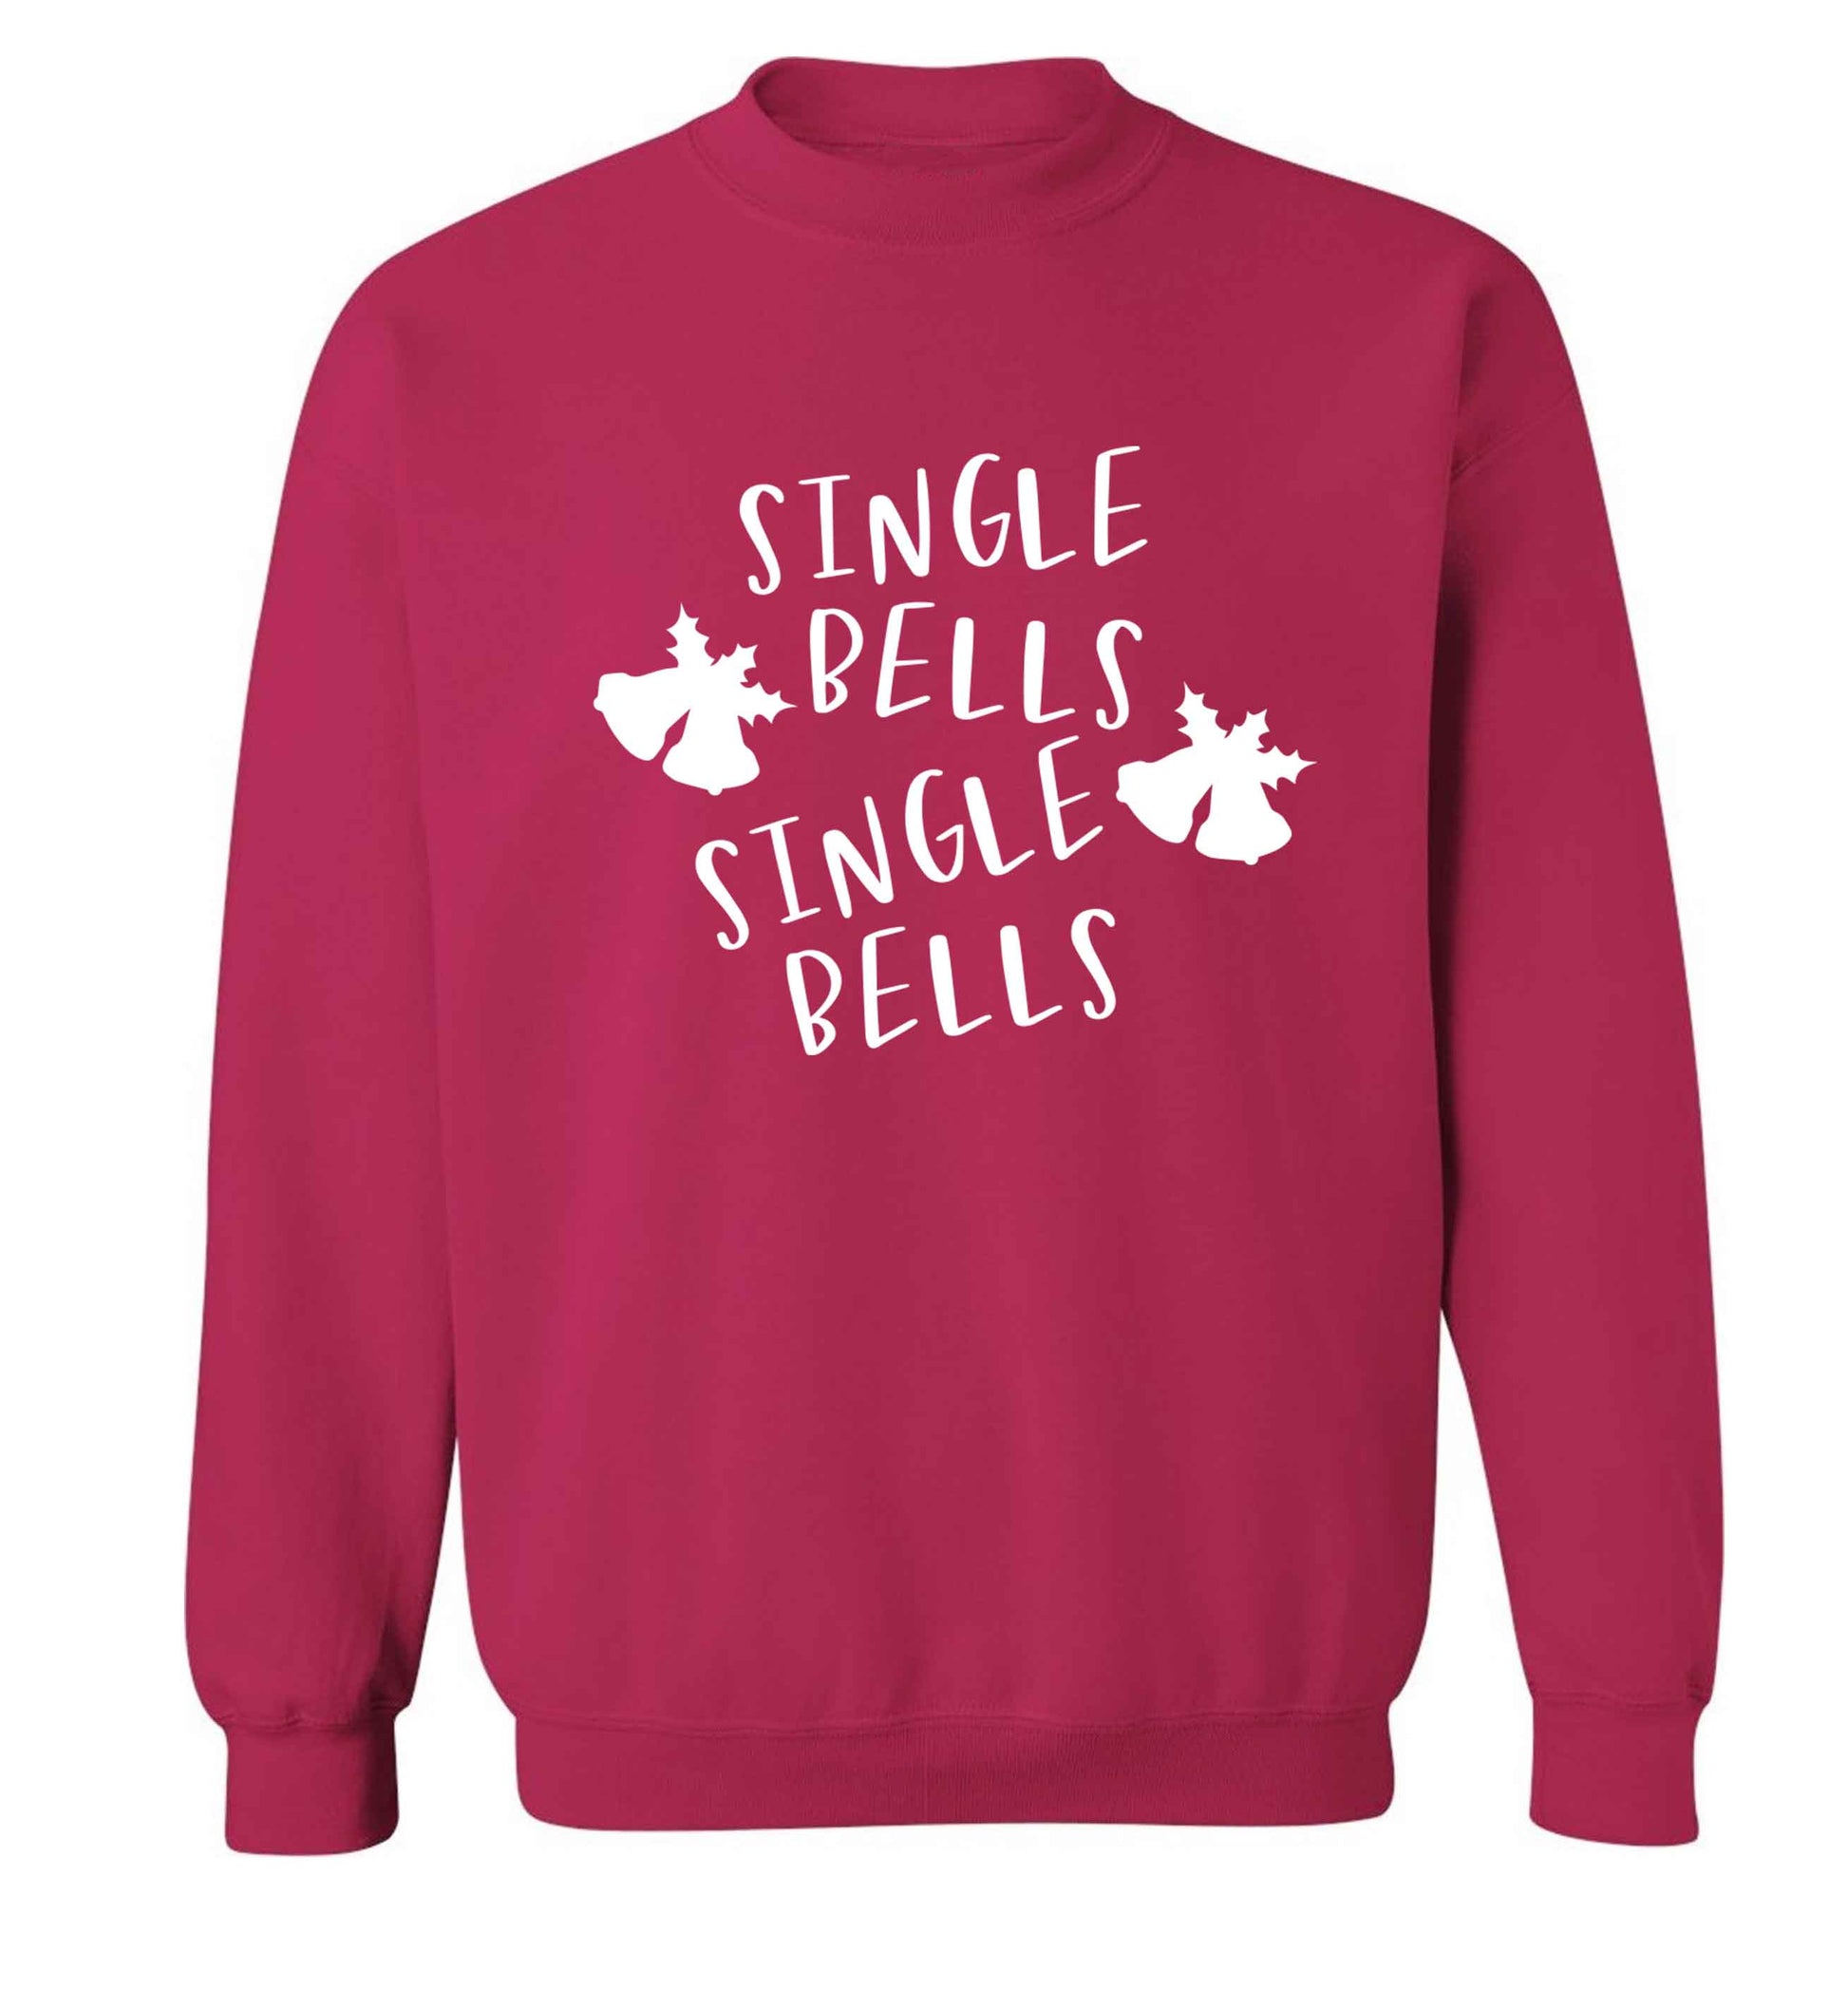 Single bells, single bells Adult's unisex pink Sweater 2XL